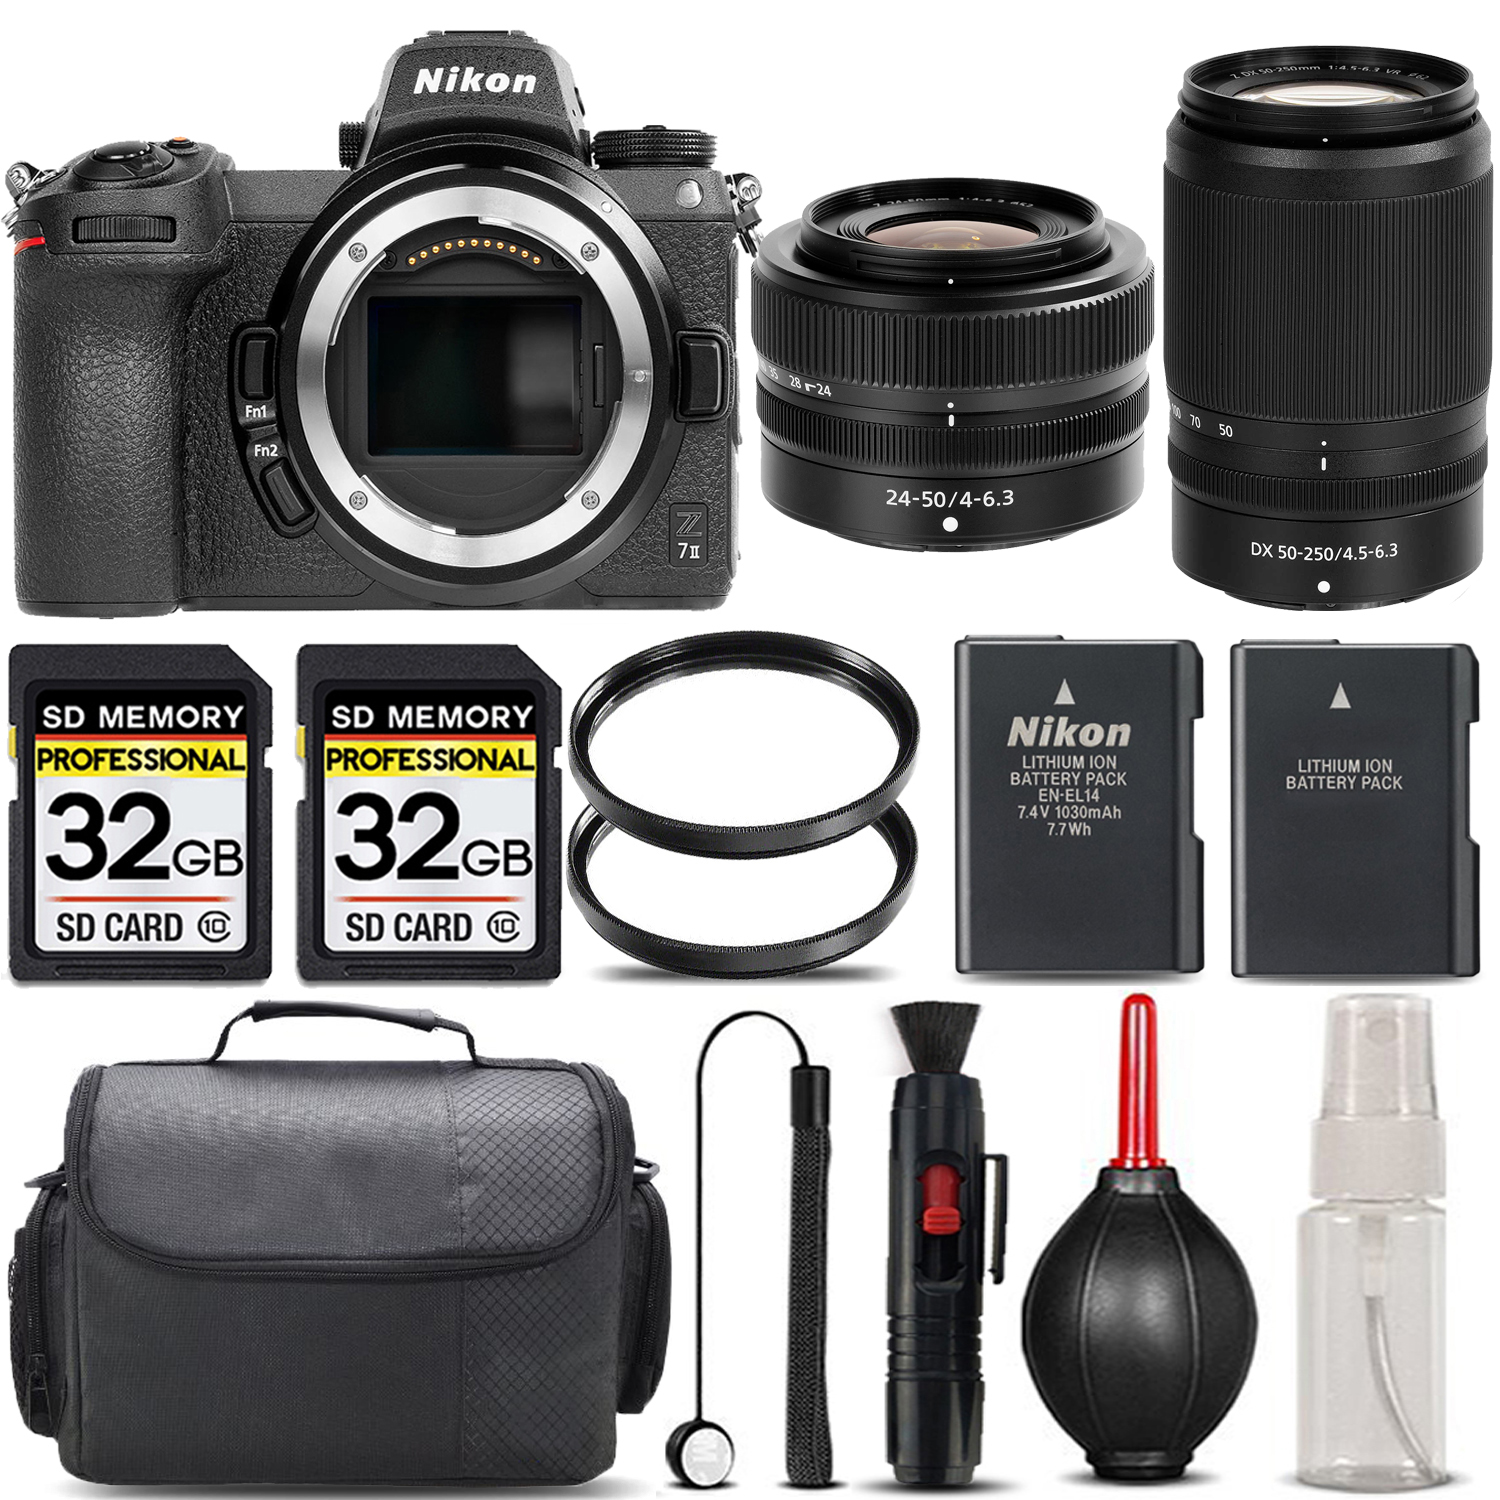 Z7 II Mirrorless + 50-250mm Lens + 24-50mm Lens + Handbag - SAVE BIG KIT *FREE SHIPPING*